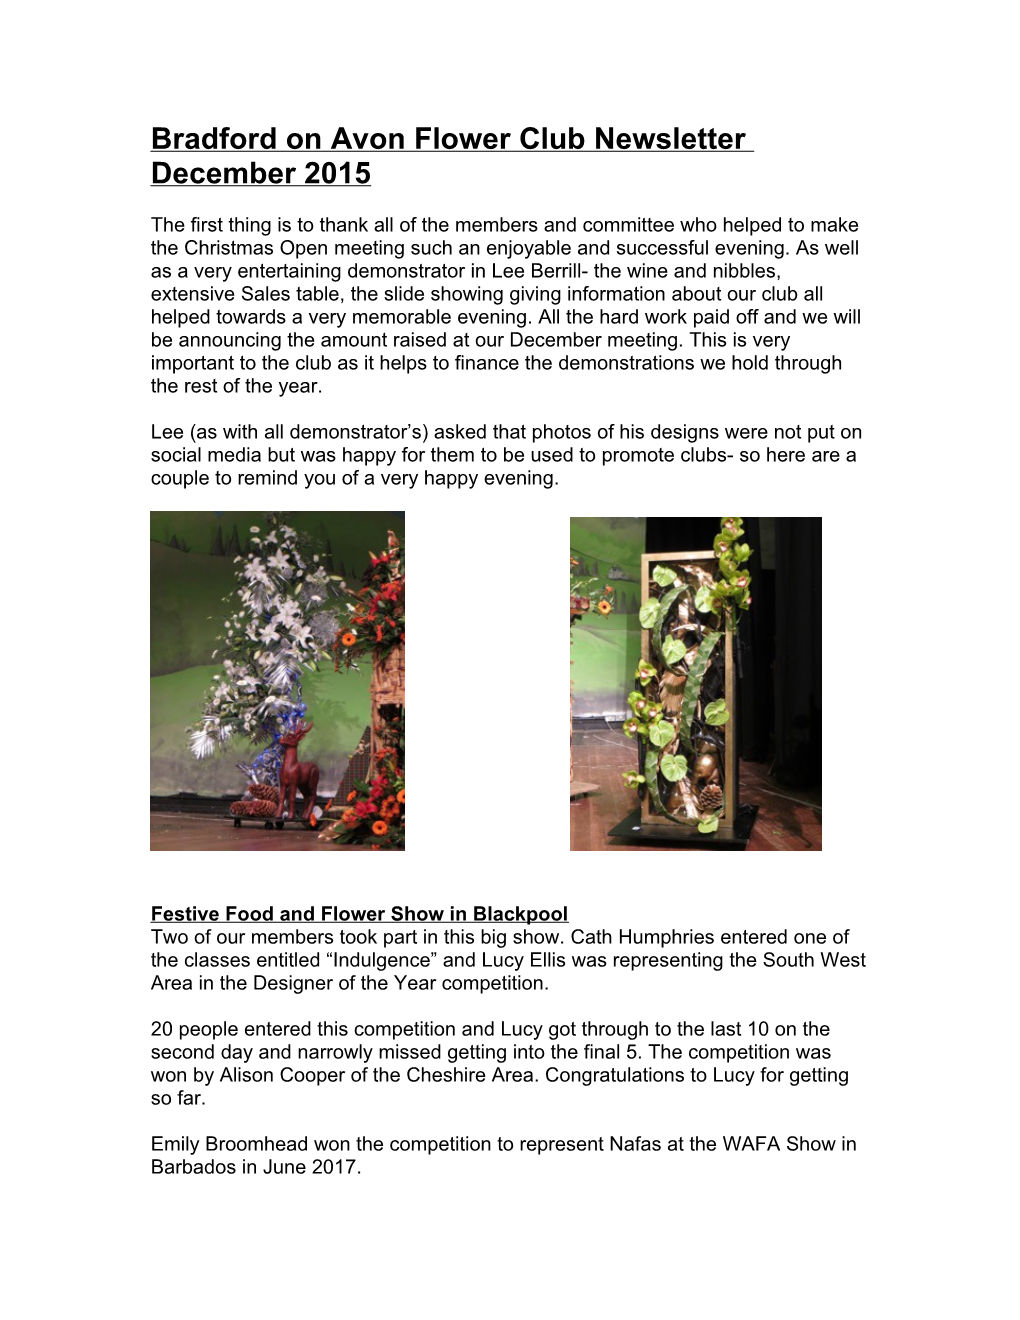 Bradford on Avon Flower Club Newsletter December 2015